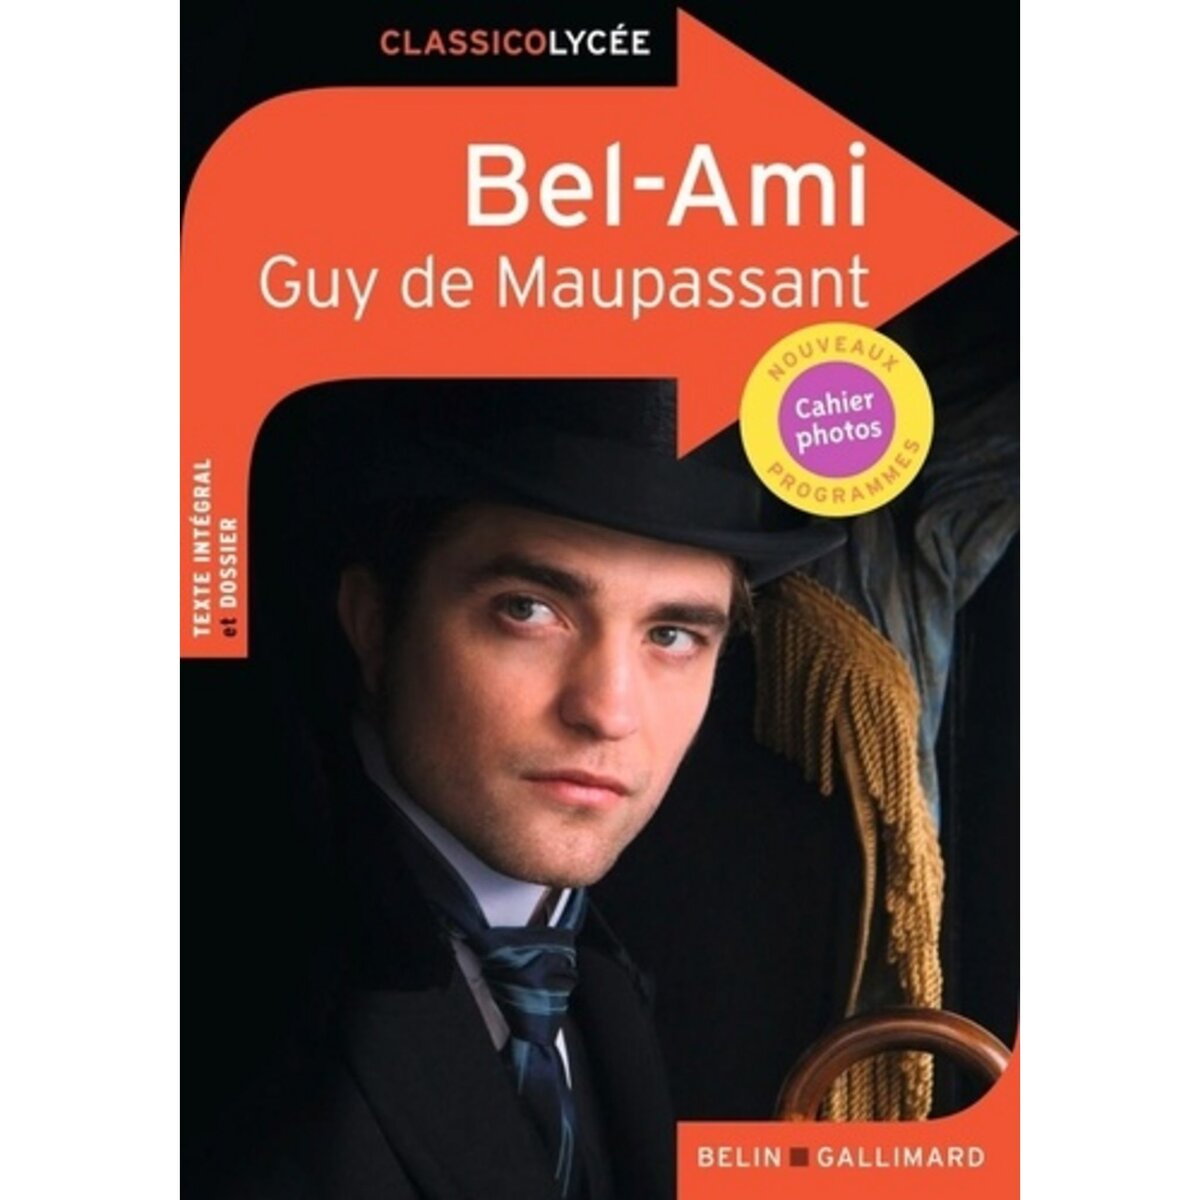  BEL-AMI, Maupassant Guy de